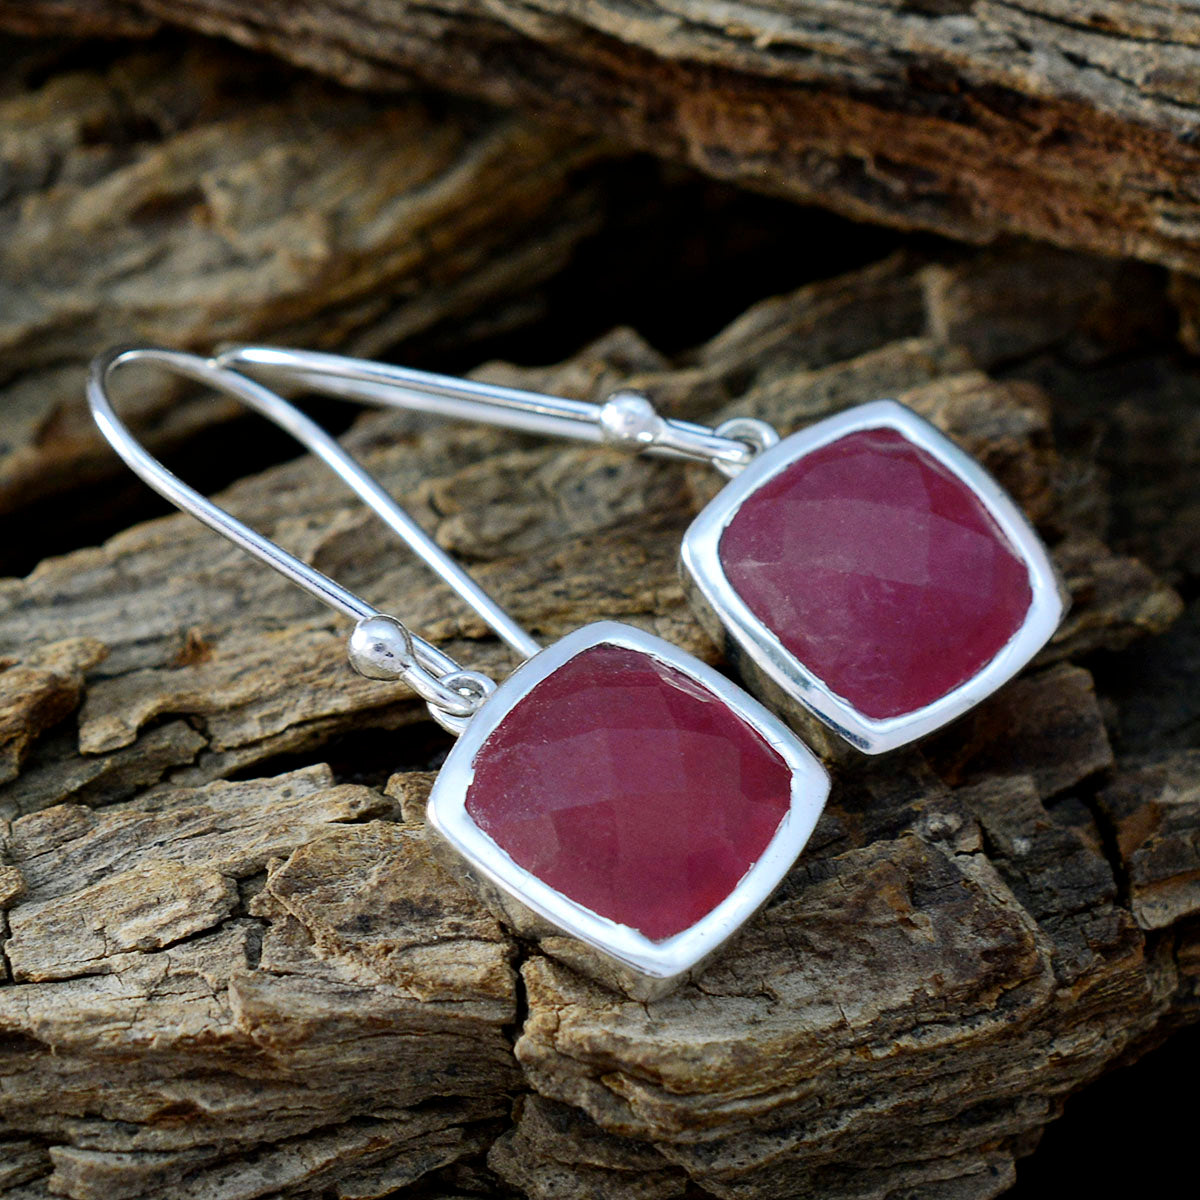 Riyo Good Gemstones Octogon Checker Red Indian Ruby Silver Earring children day gift